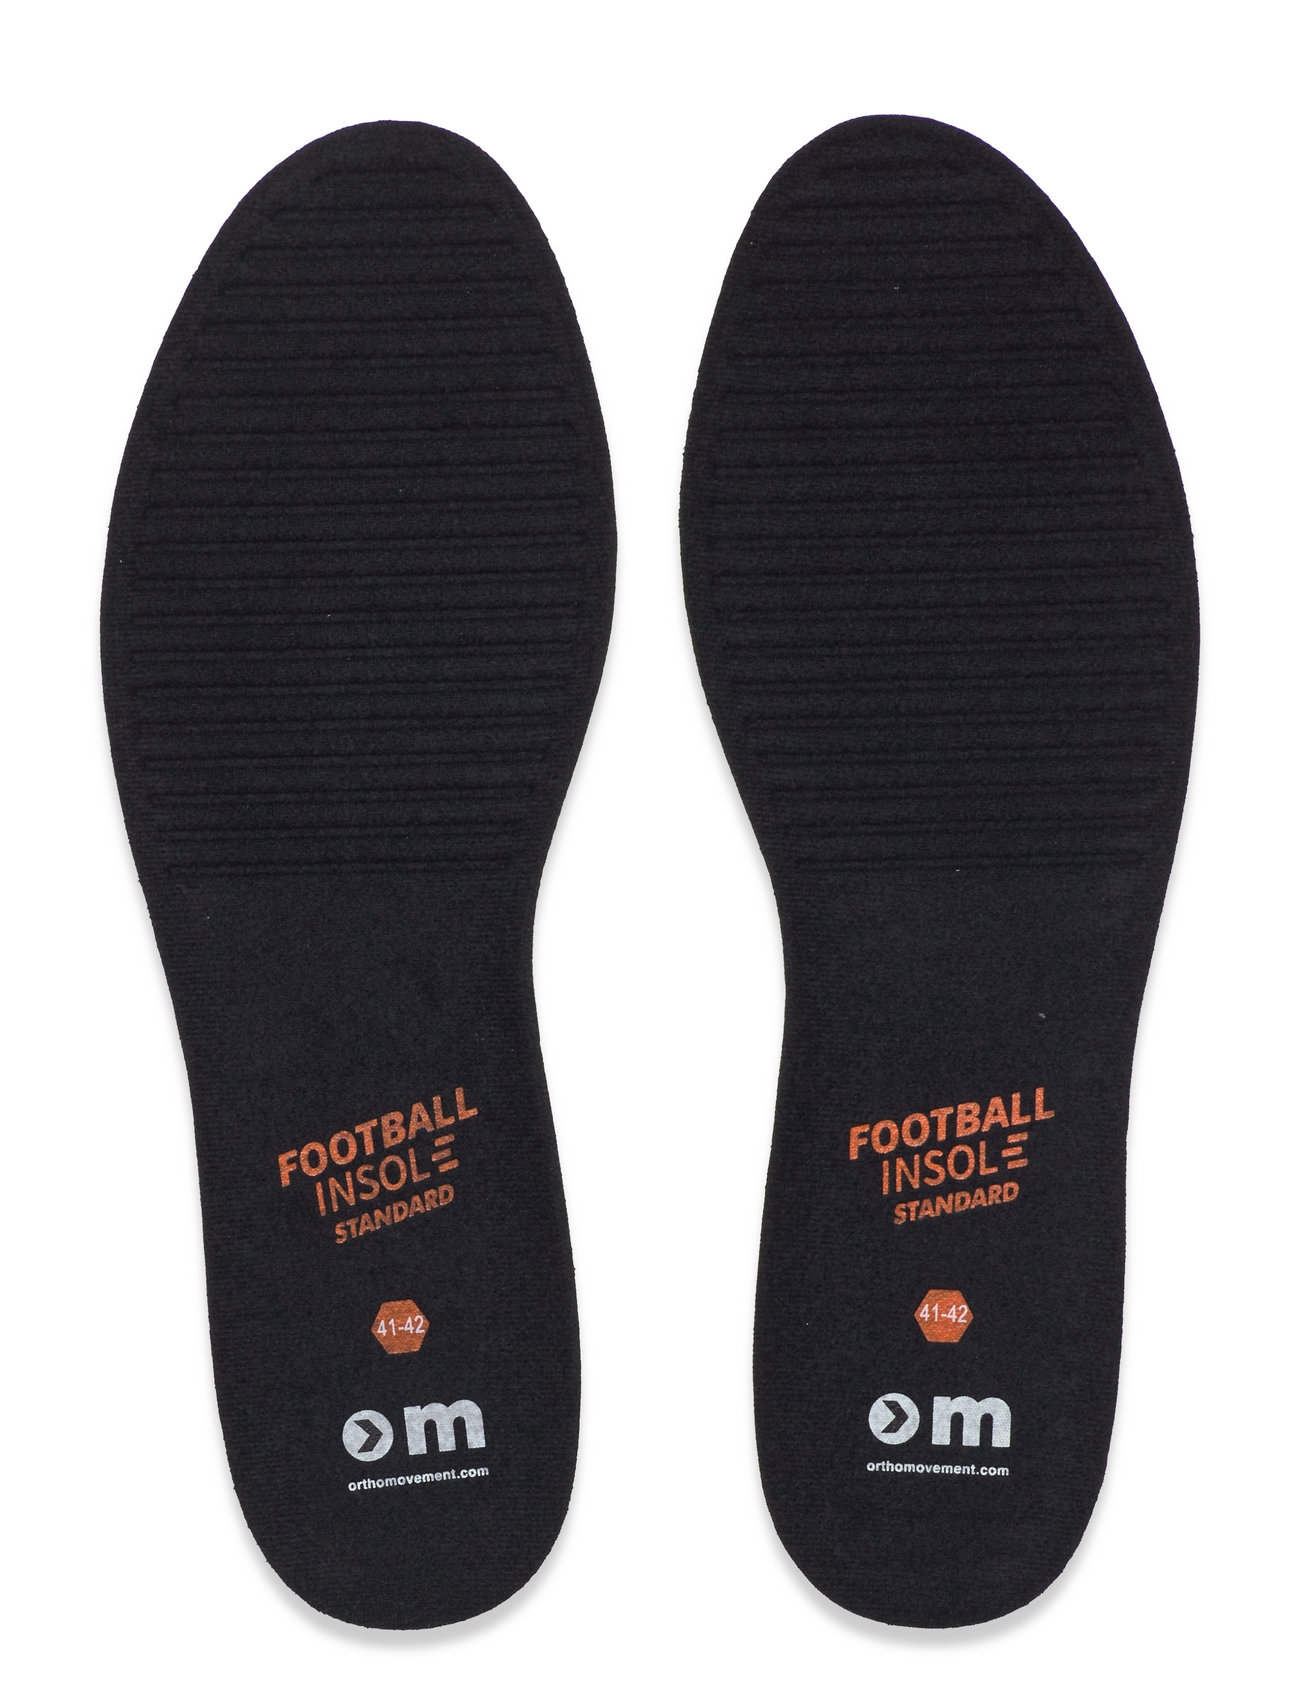 Standard Insole Football Eu 39-40 Sport Shoe Accessories Soles Black Ortho Movement